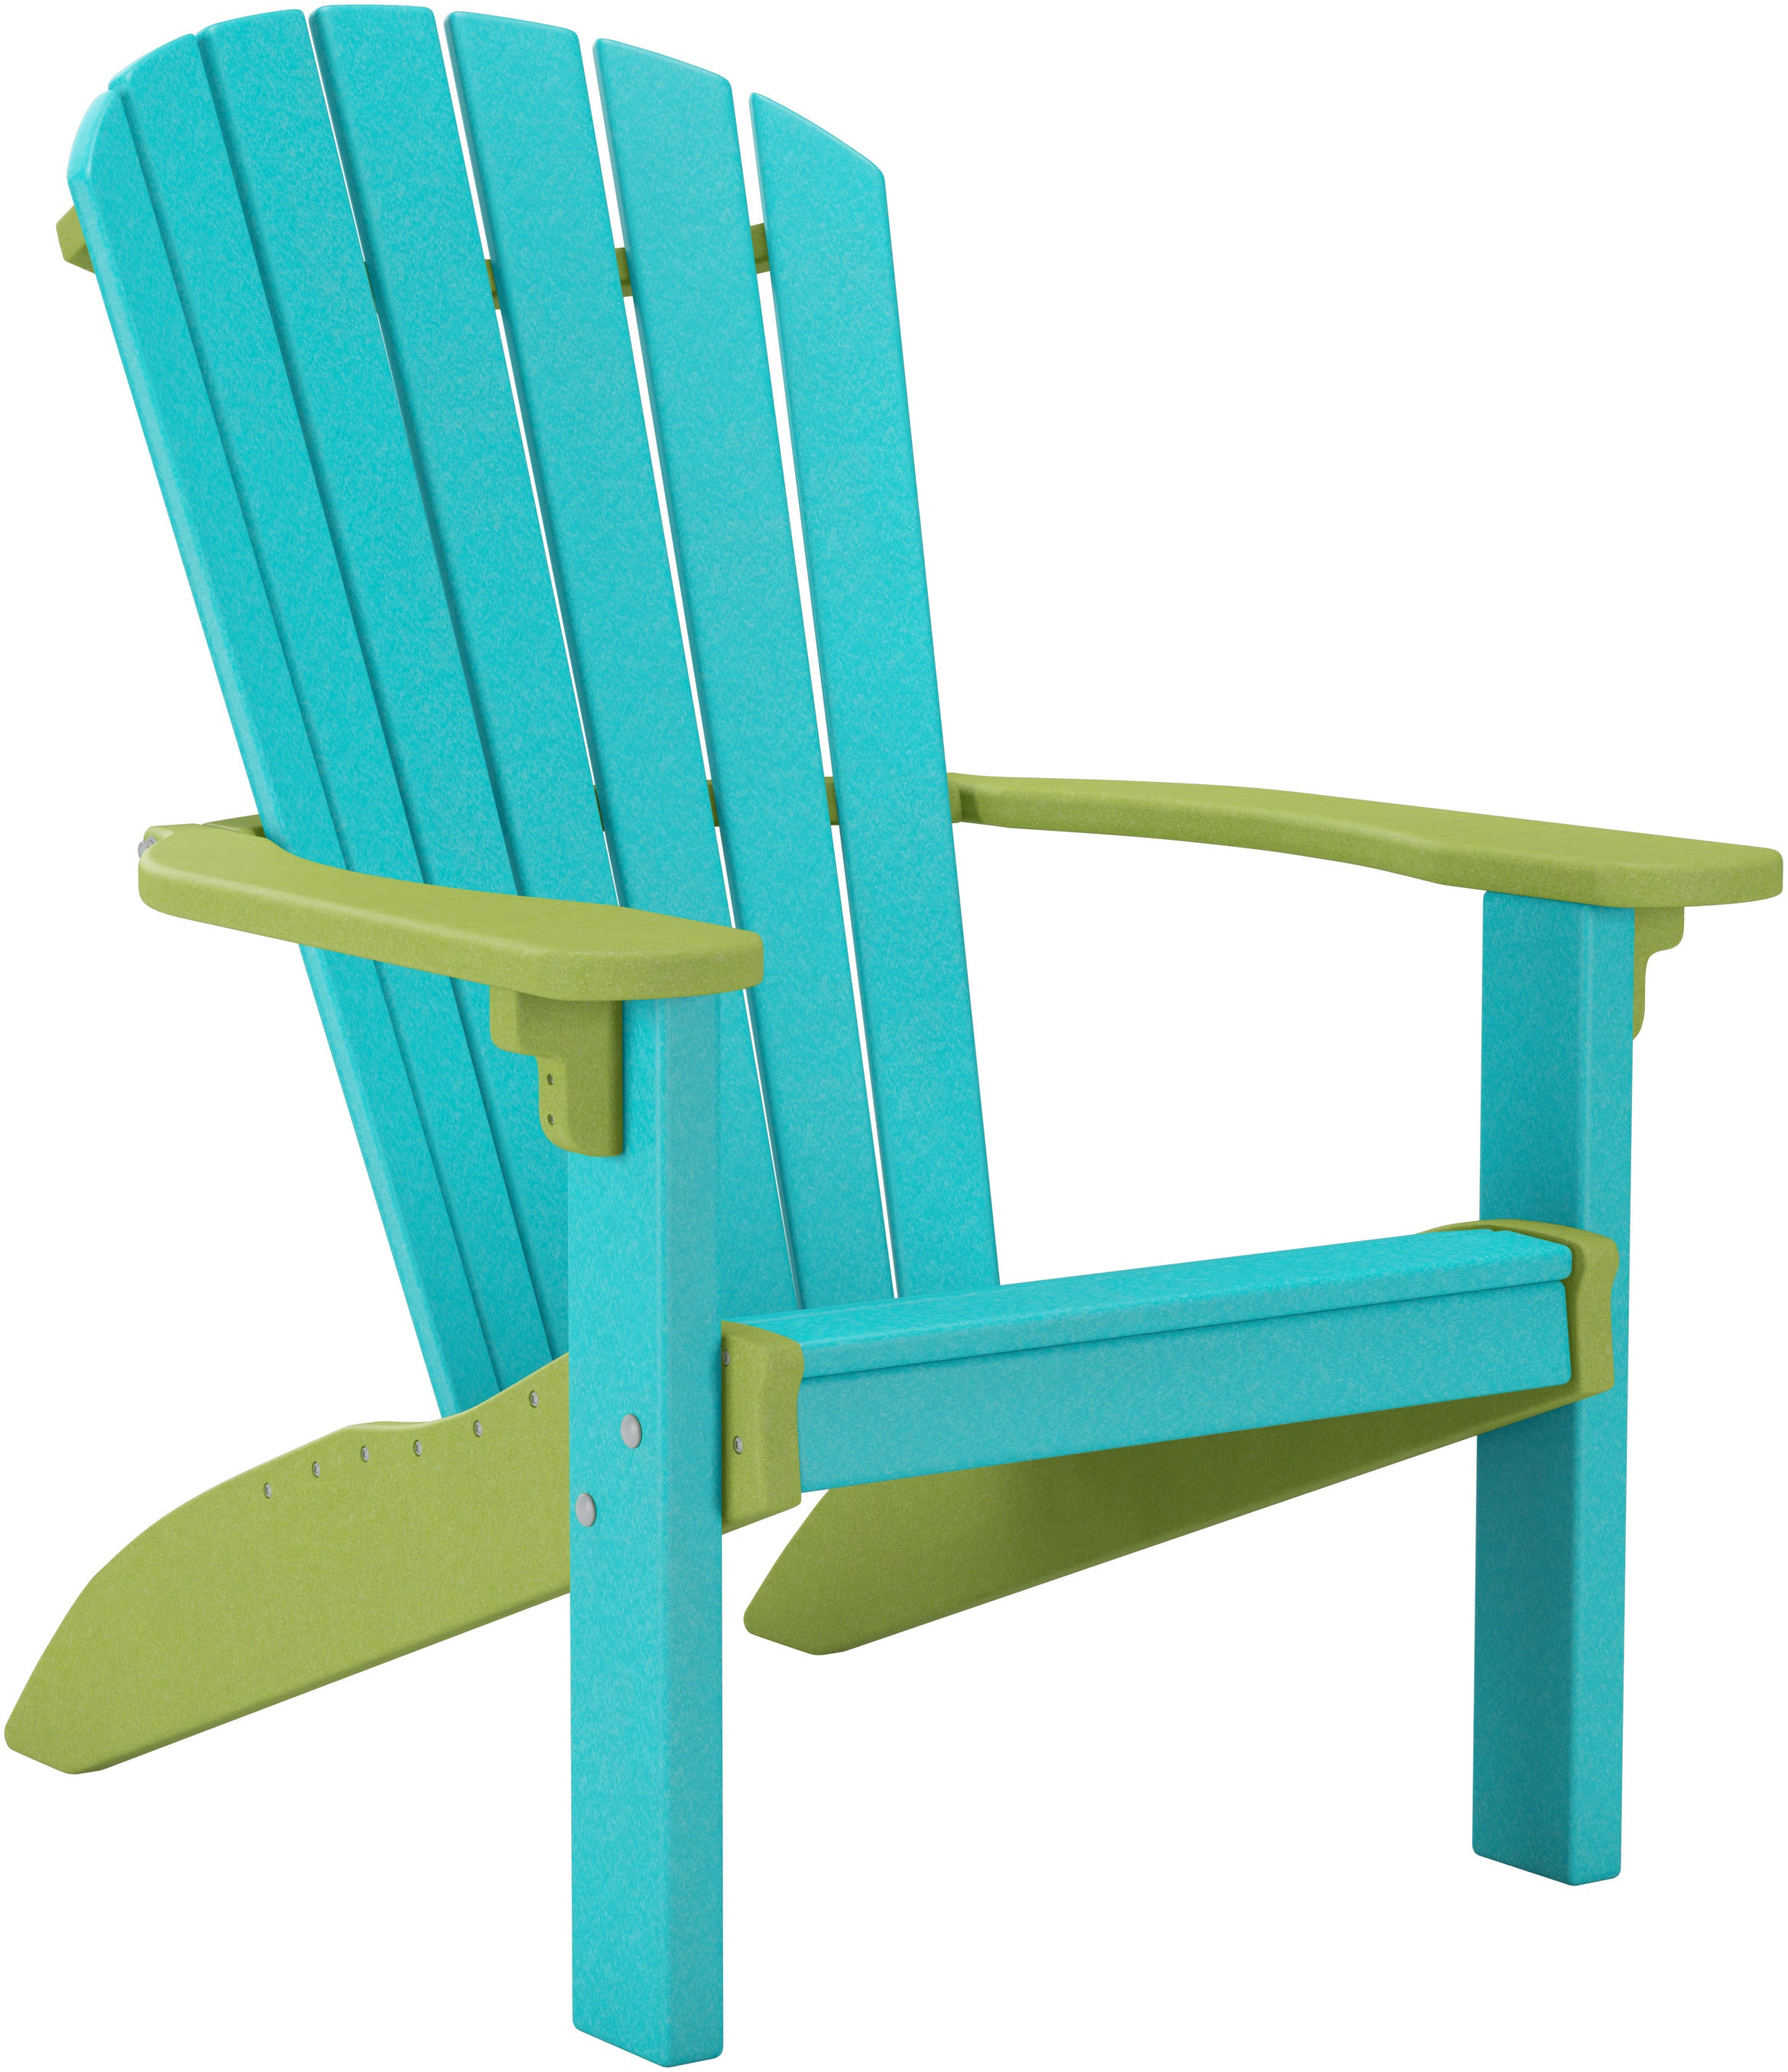 SeaAira Adirondack Chair